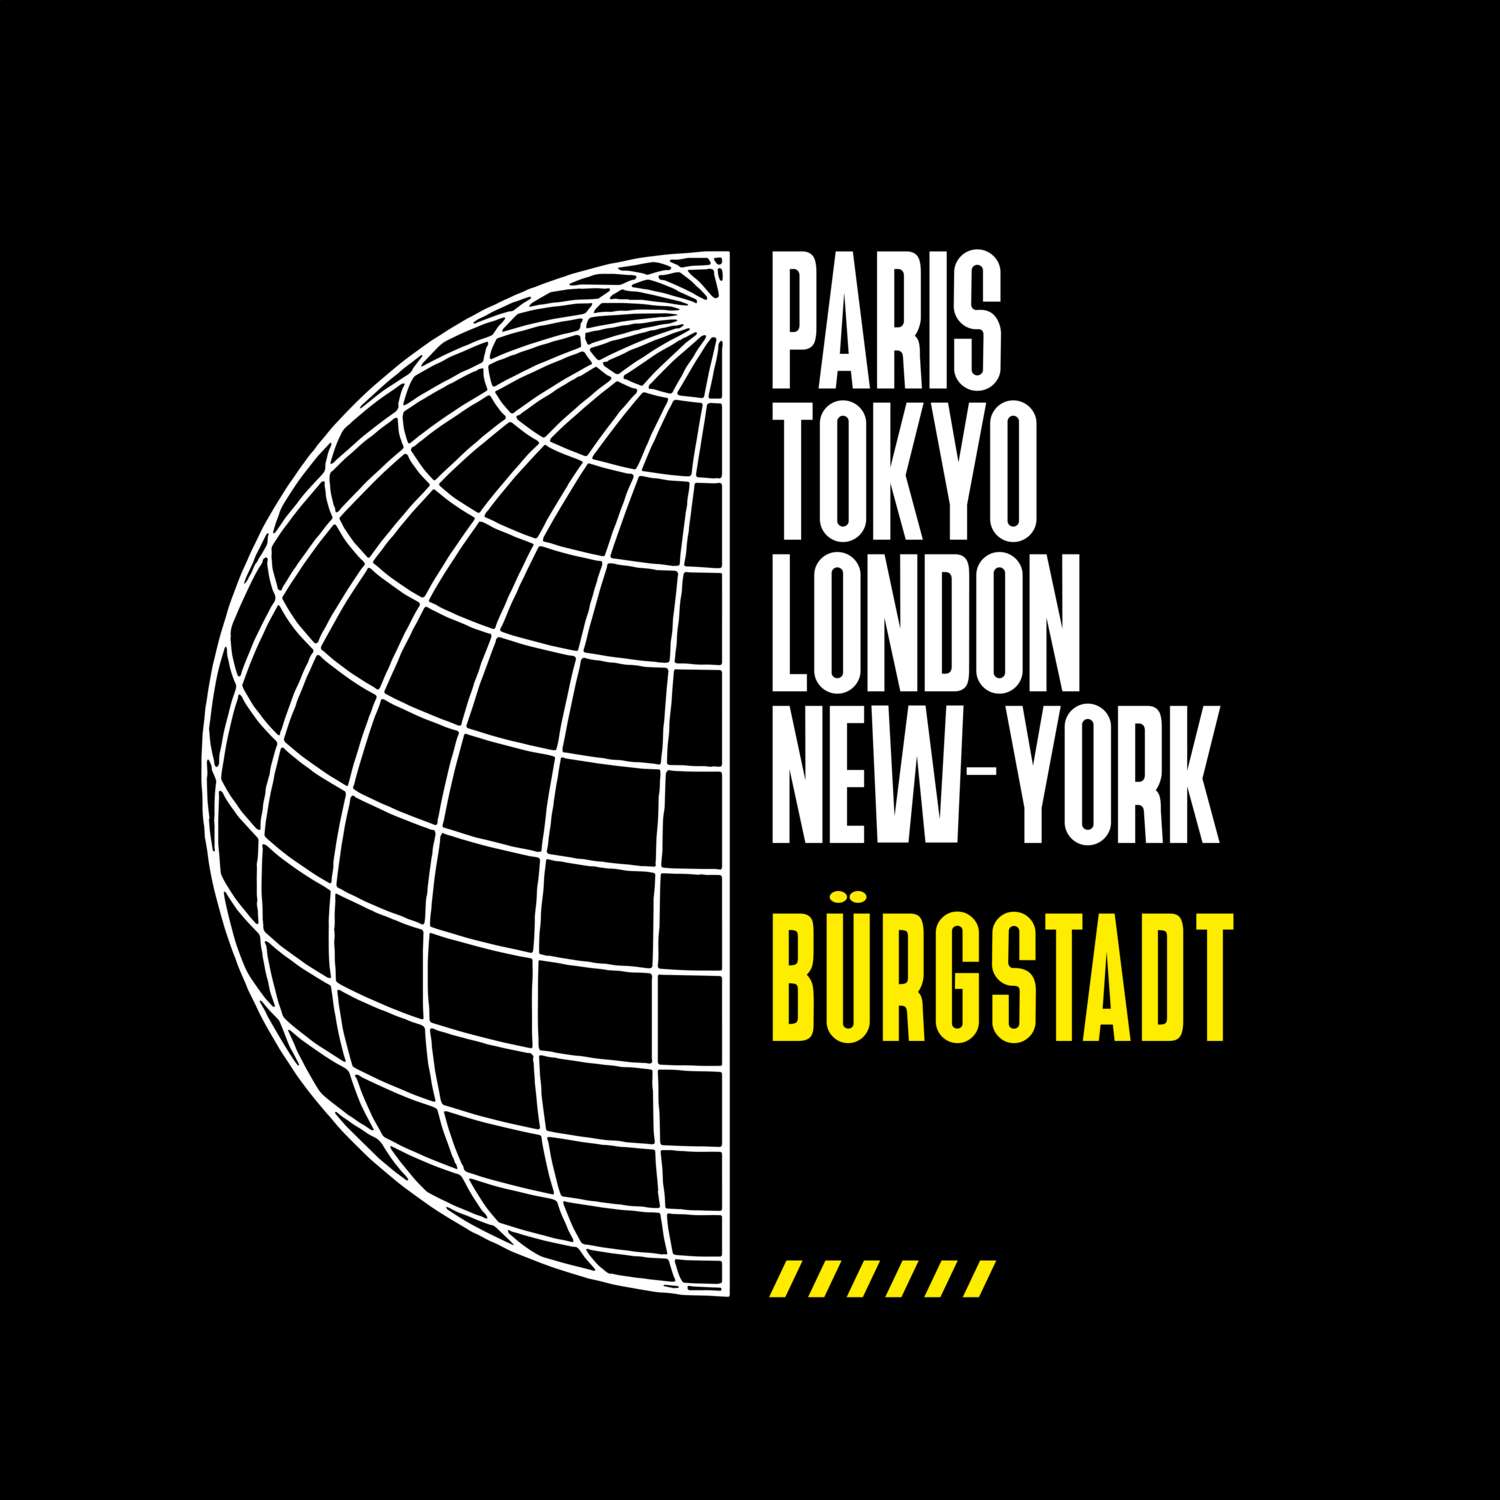 Bürgstadt T-Shirt »Paris Tokyo London«